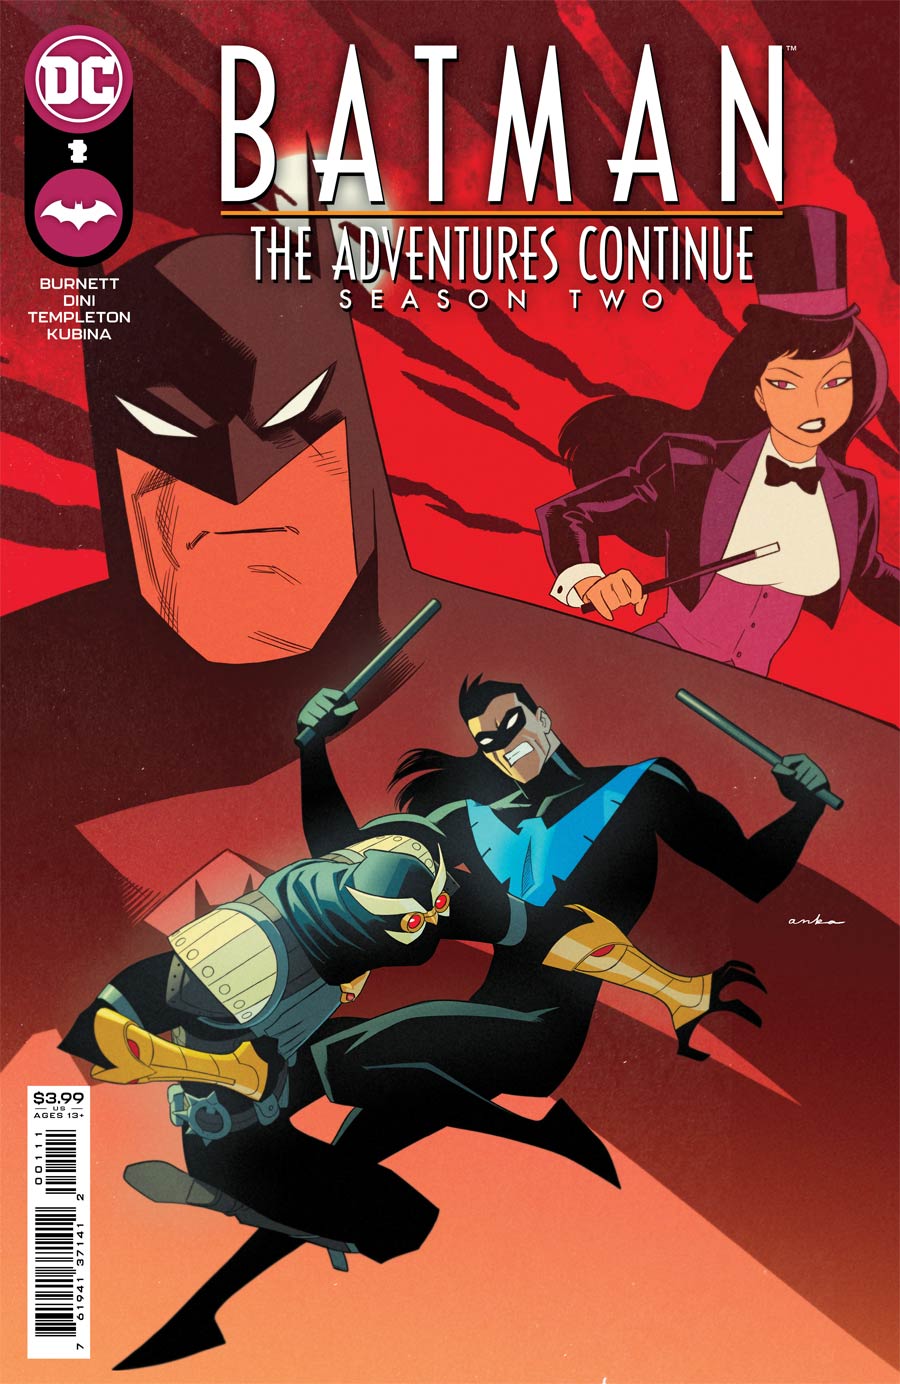 Batman The Adventures Continue Season II #2 Cover A Regular Kris Anka Cover